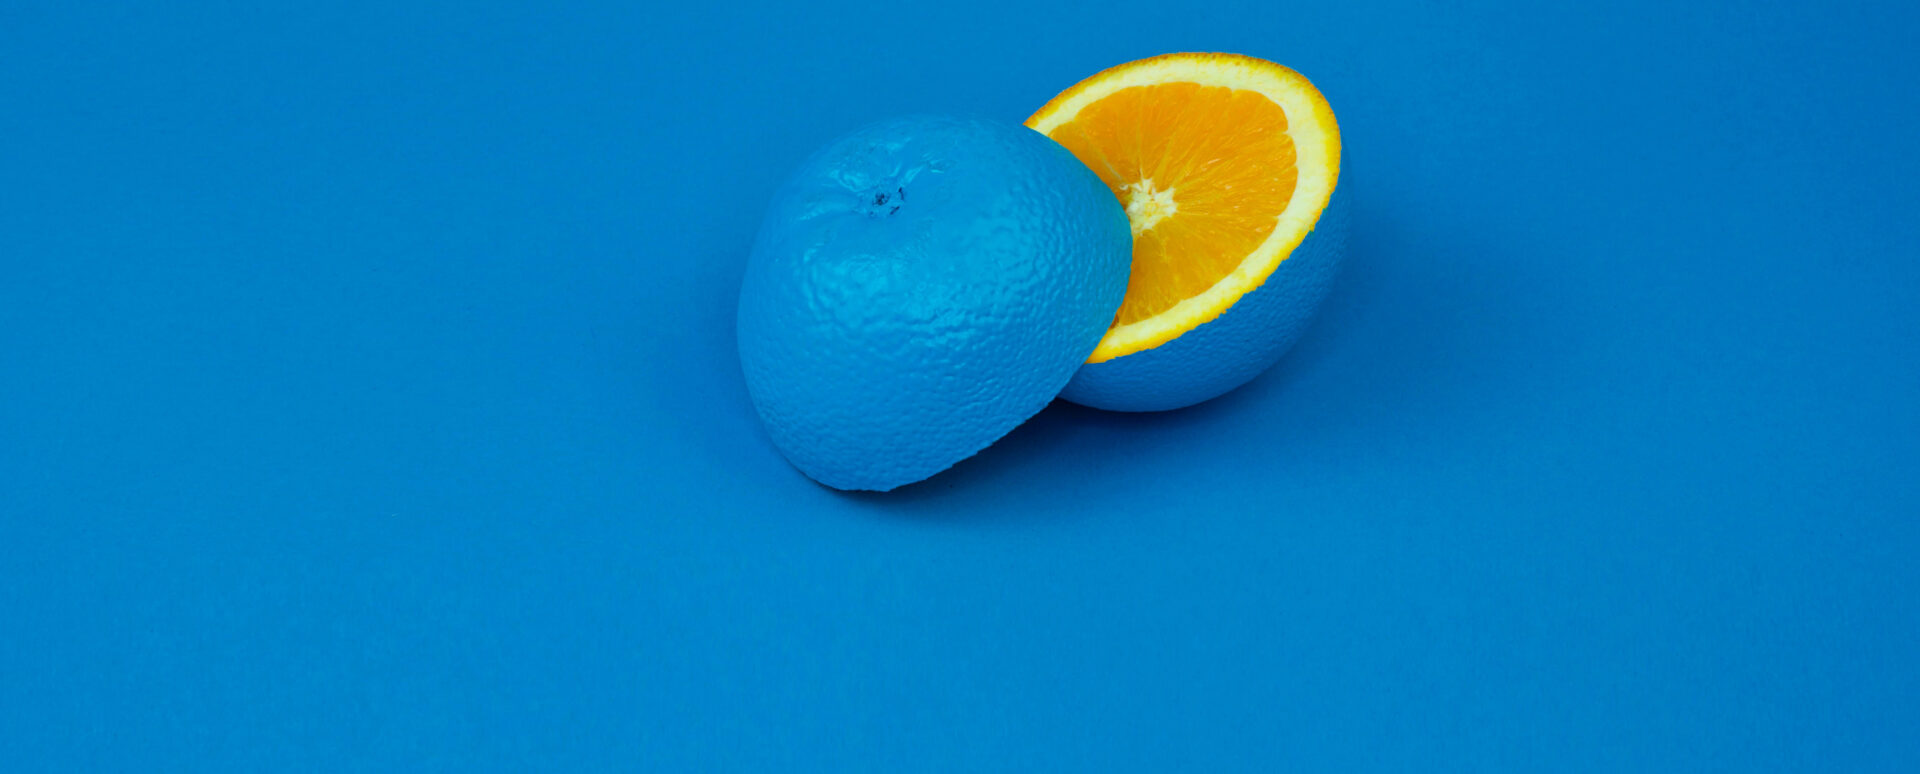 Blue orange in half